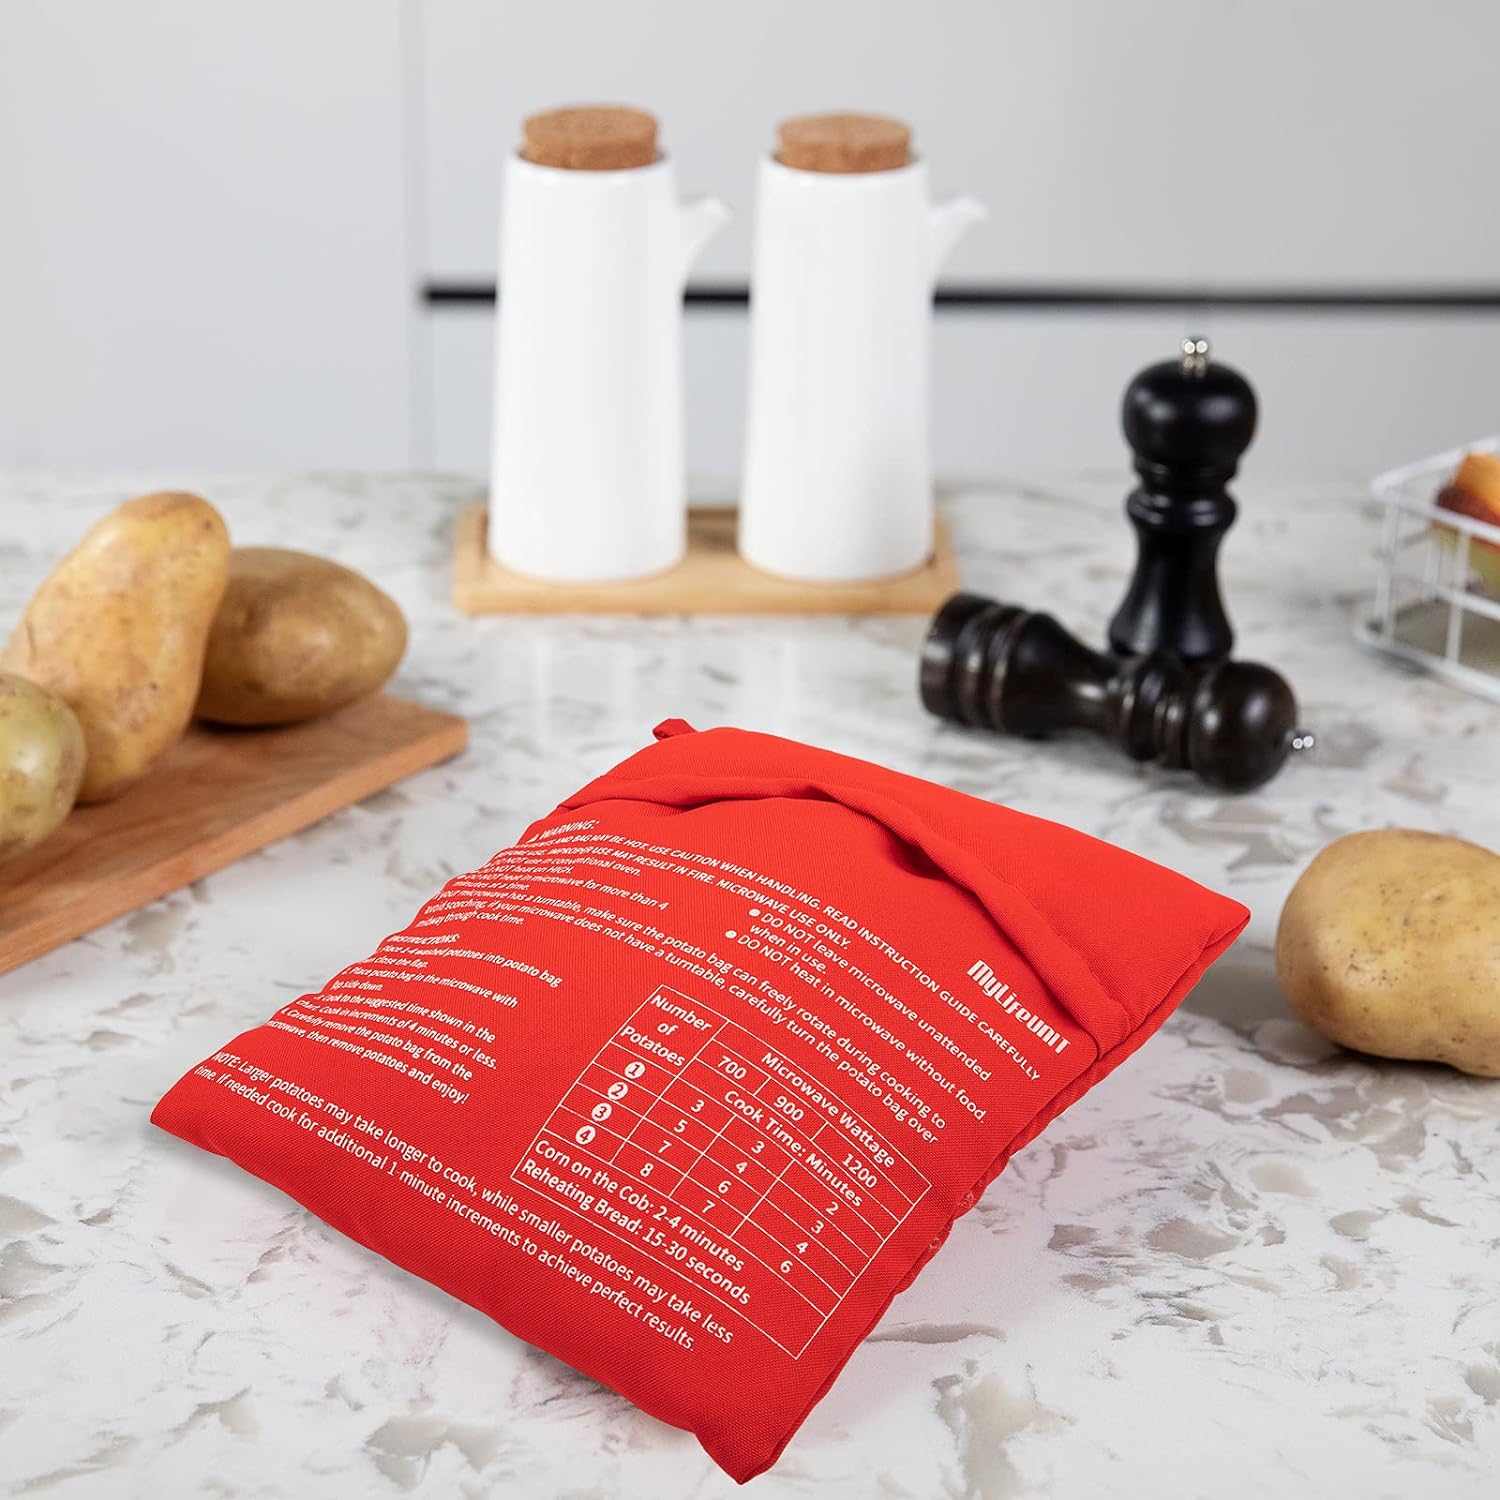 Baked Potato Microwave Baking Bag